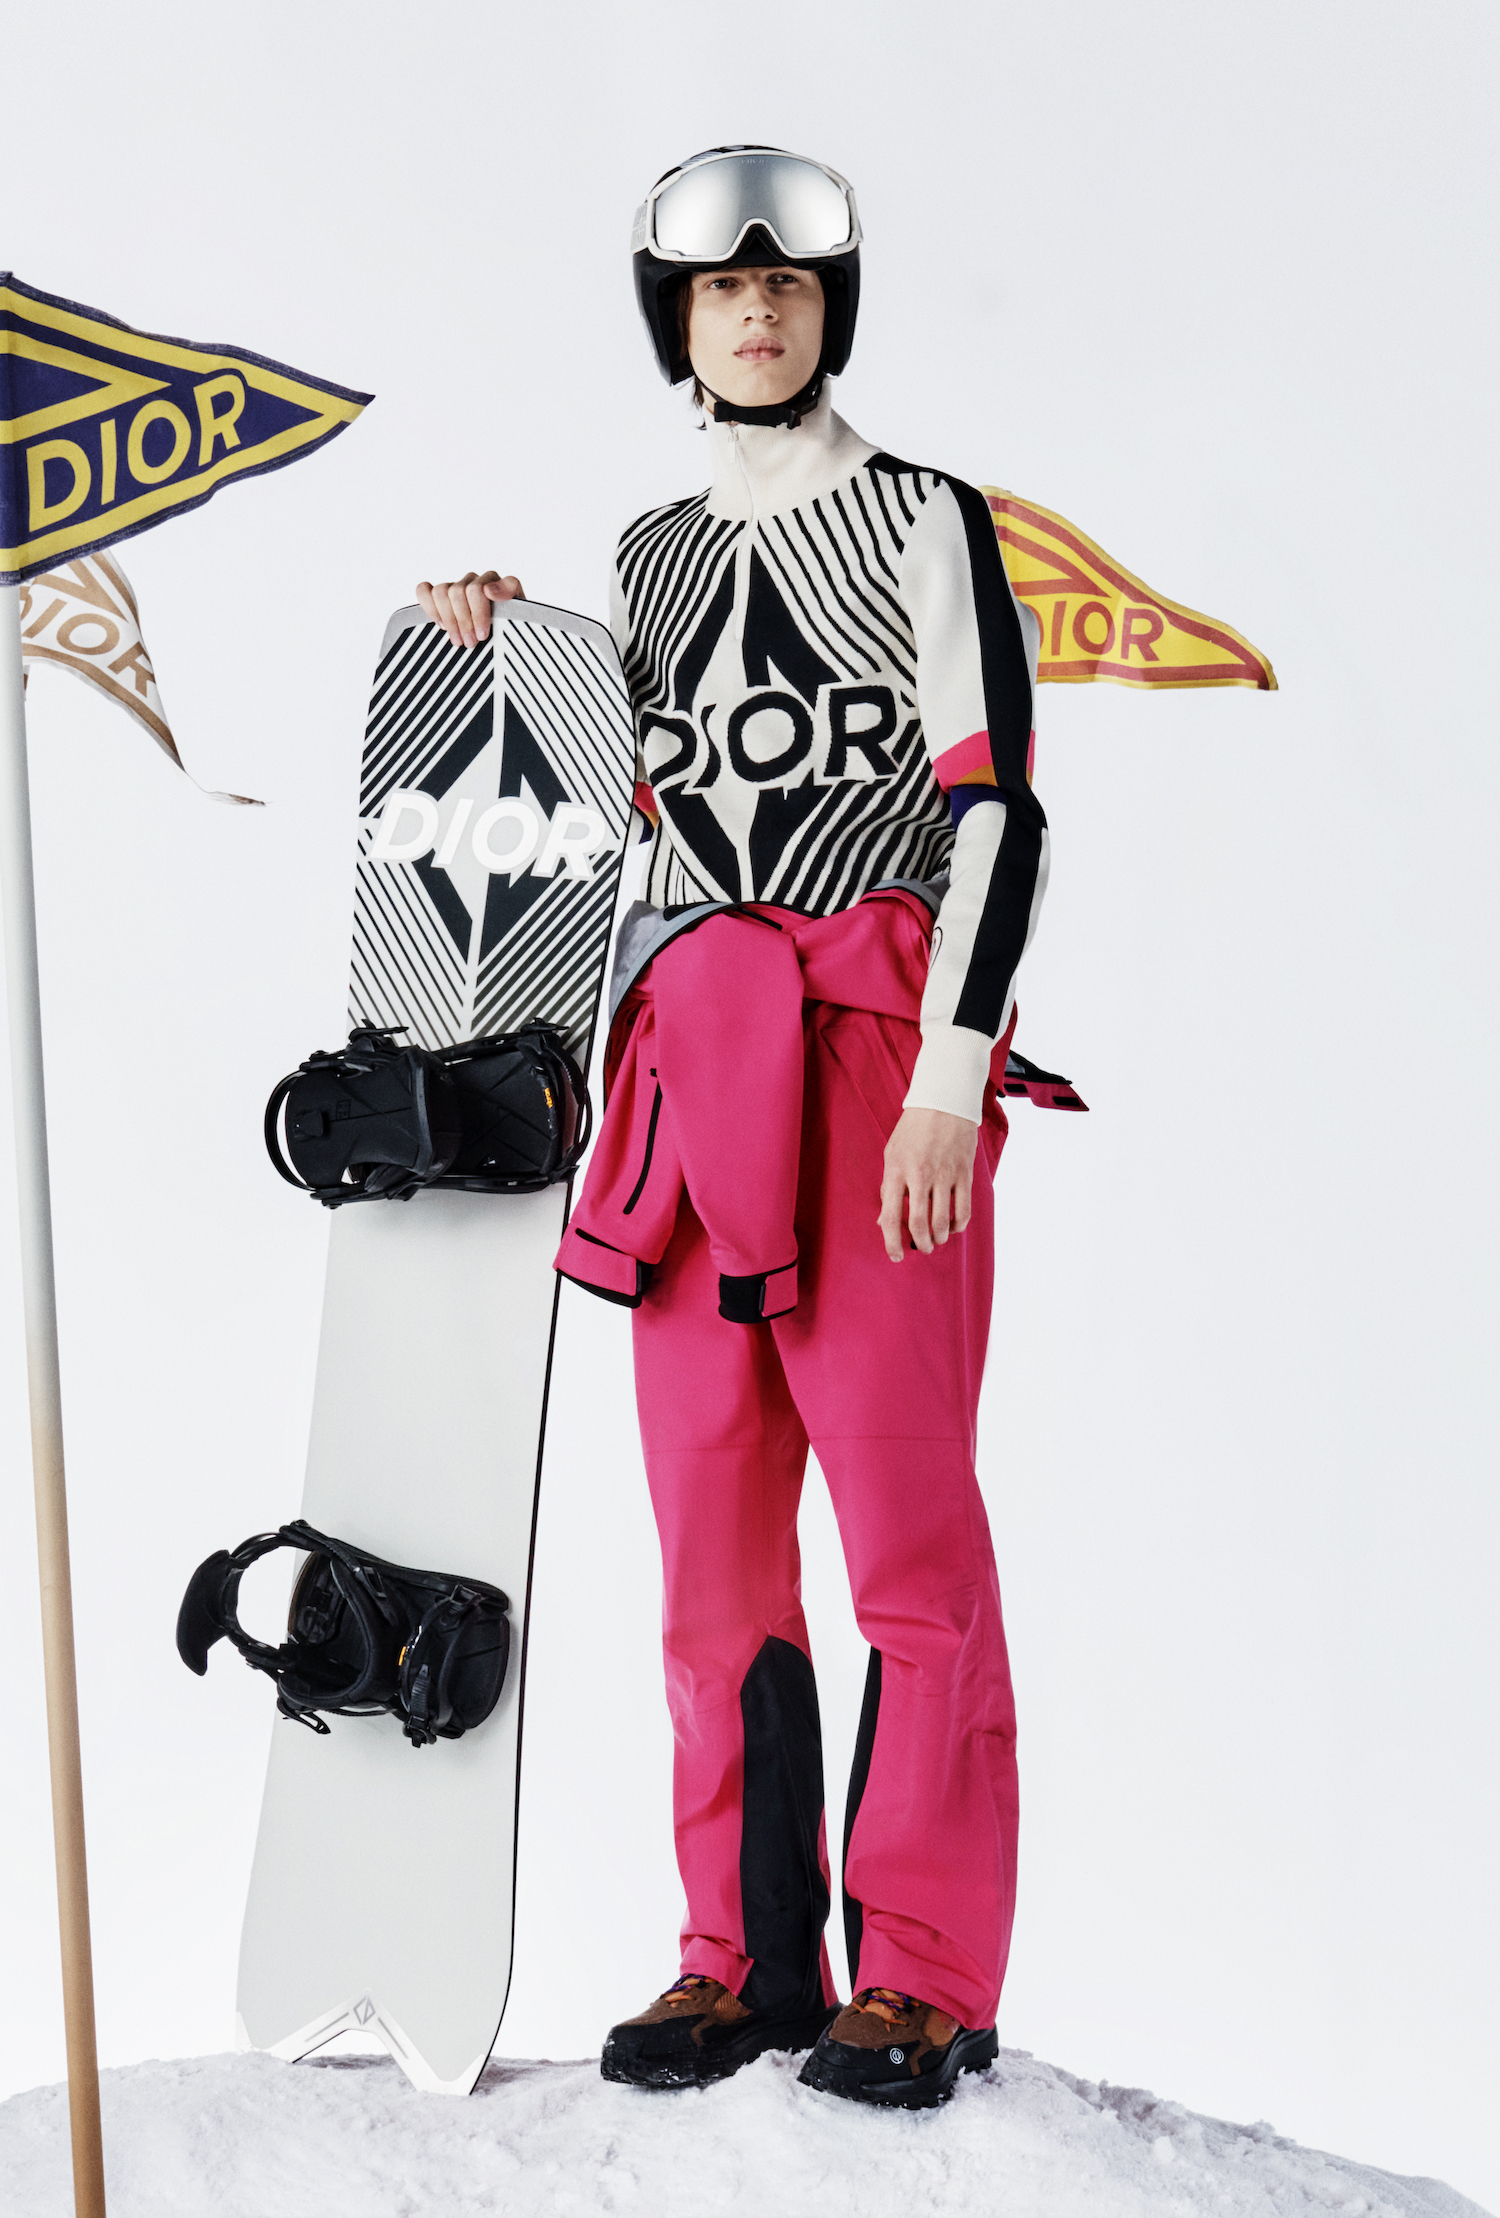 Dior's Ready-to-Wear Men's Ski Capsule Is Here - V Magazine